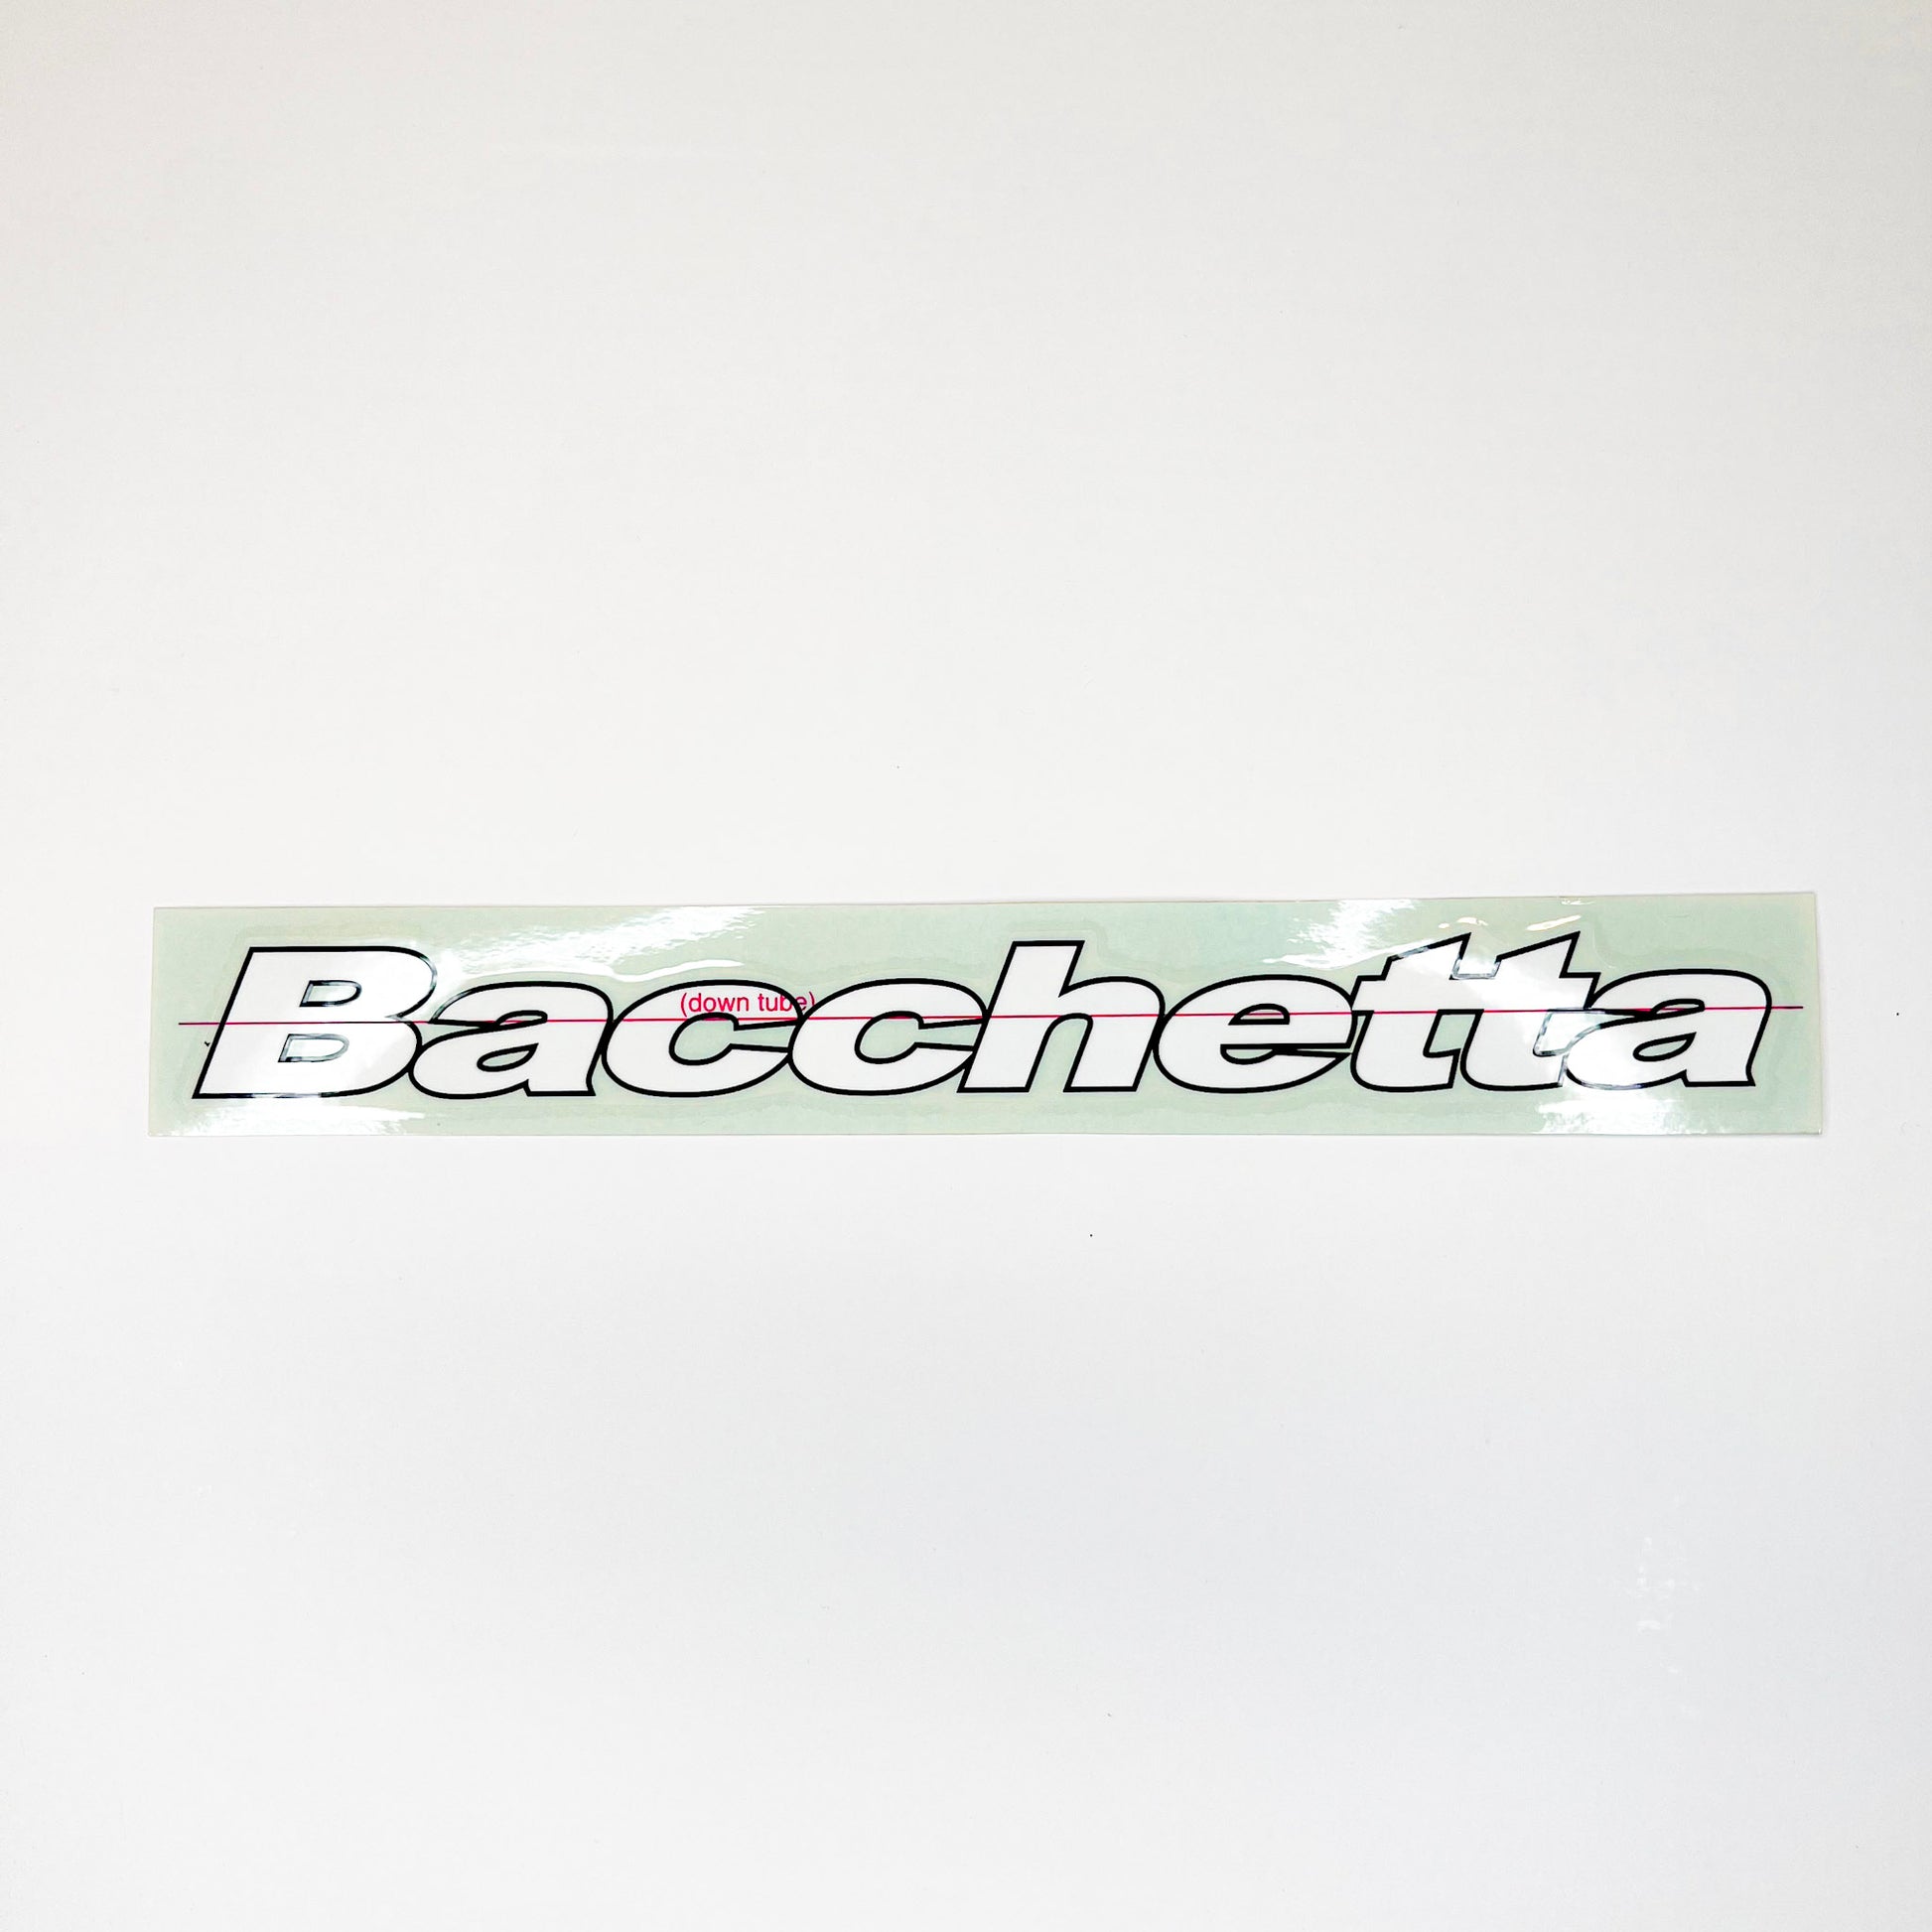 bacchetta lower white logo